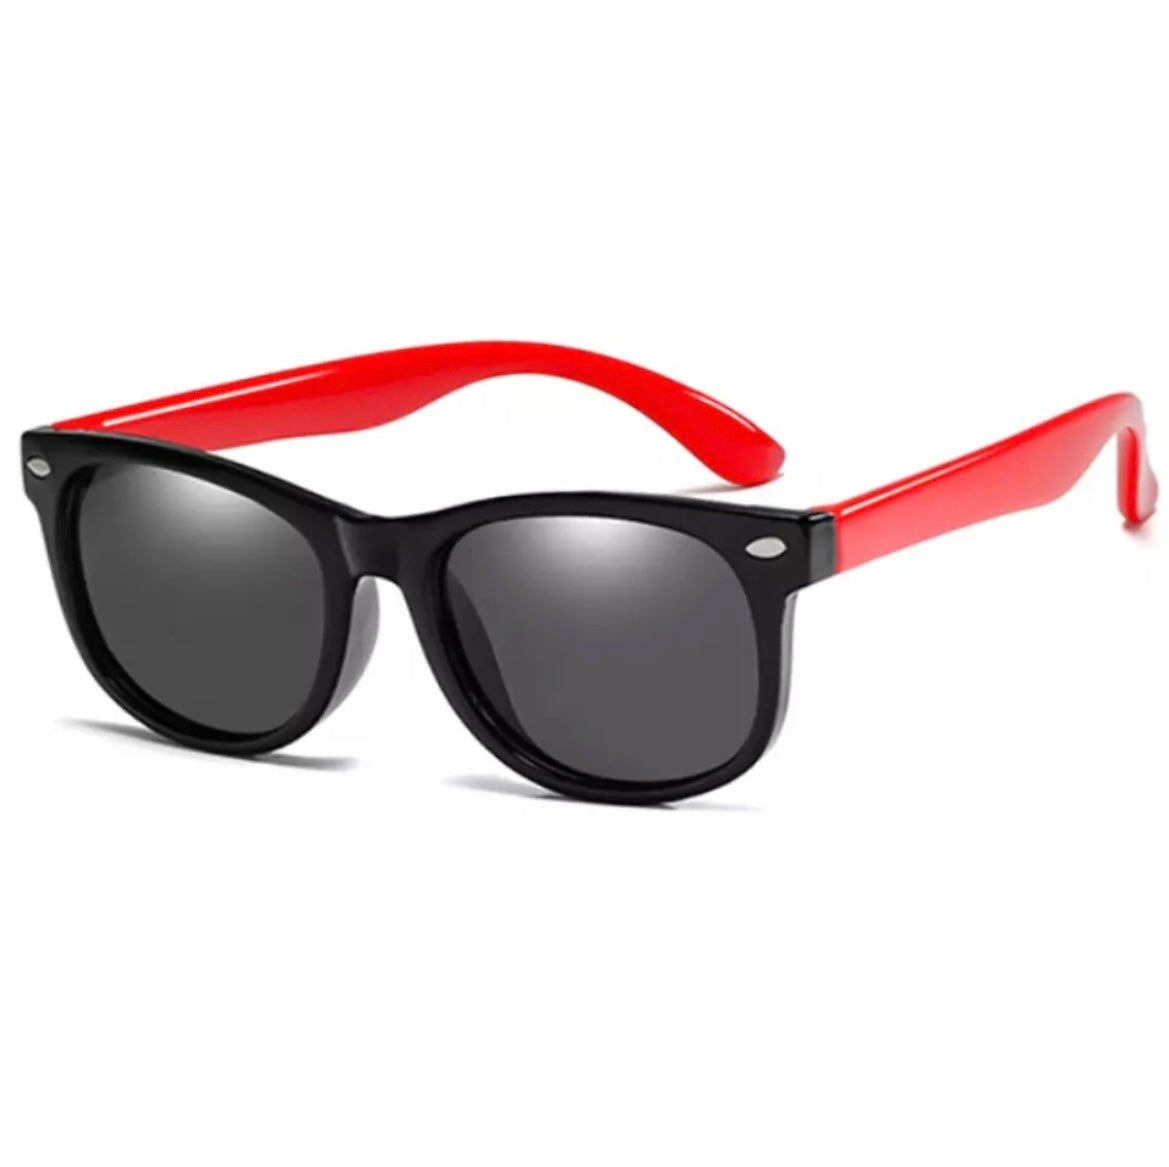 Ultra Flexible Boys Sunglasses - Black.